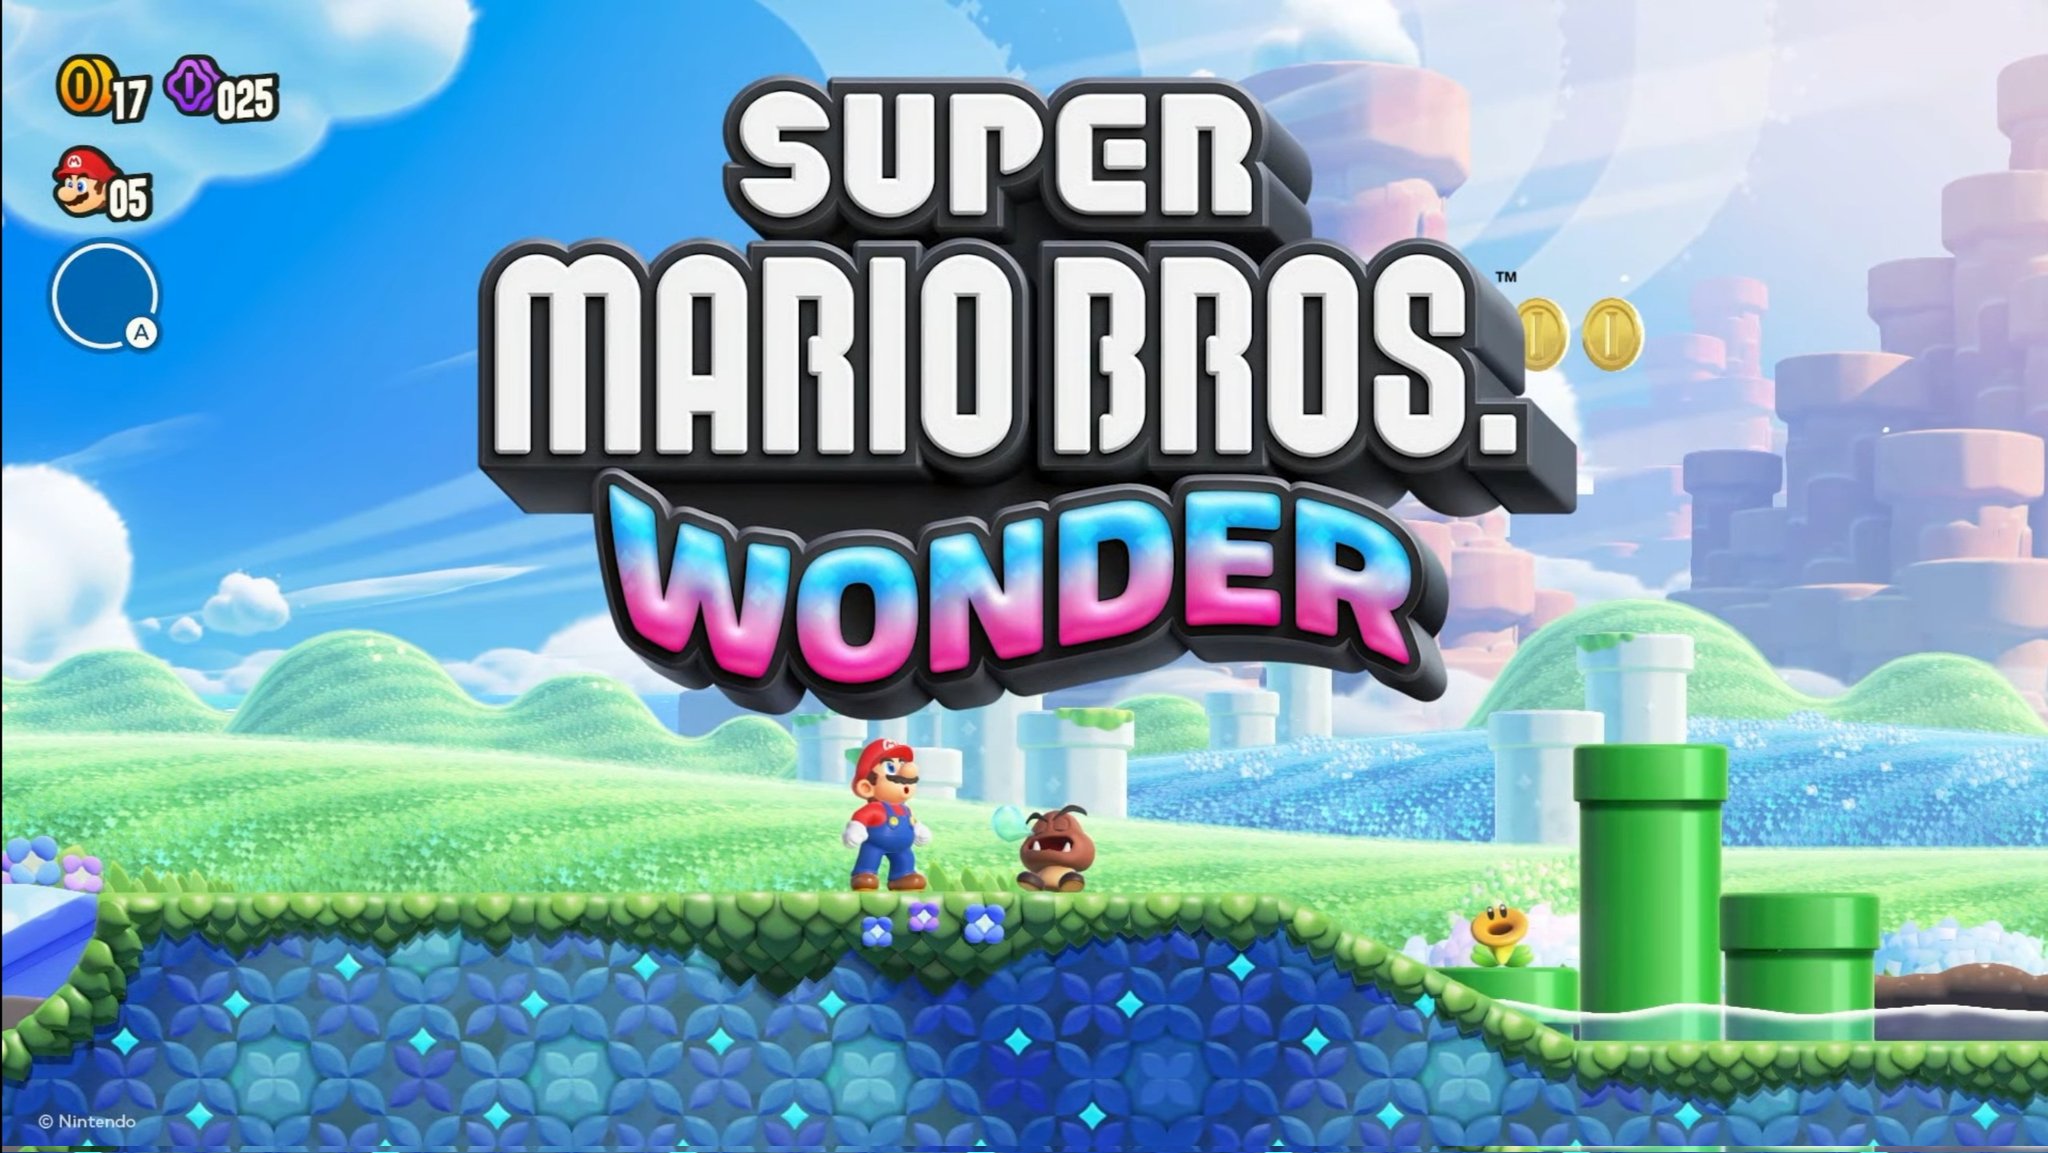 Super Mario Bros. Wonder is the new 2D Mario game SideQuesting